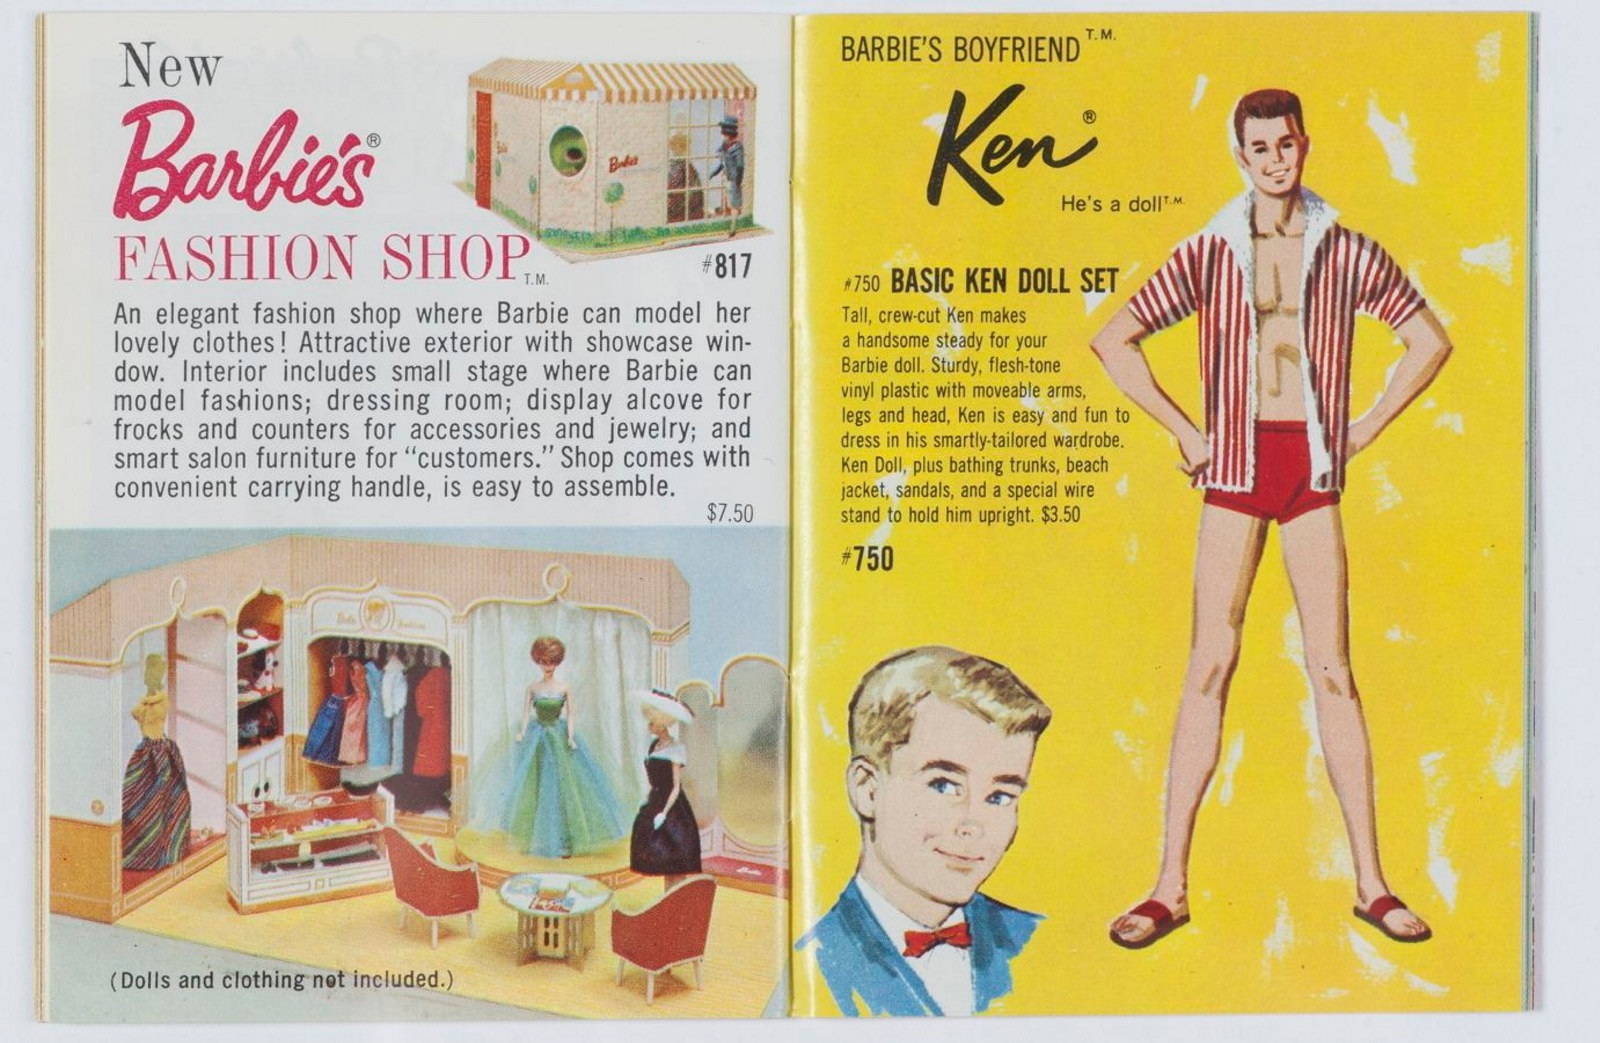 Barbie and Ken booklet